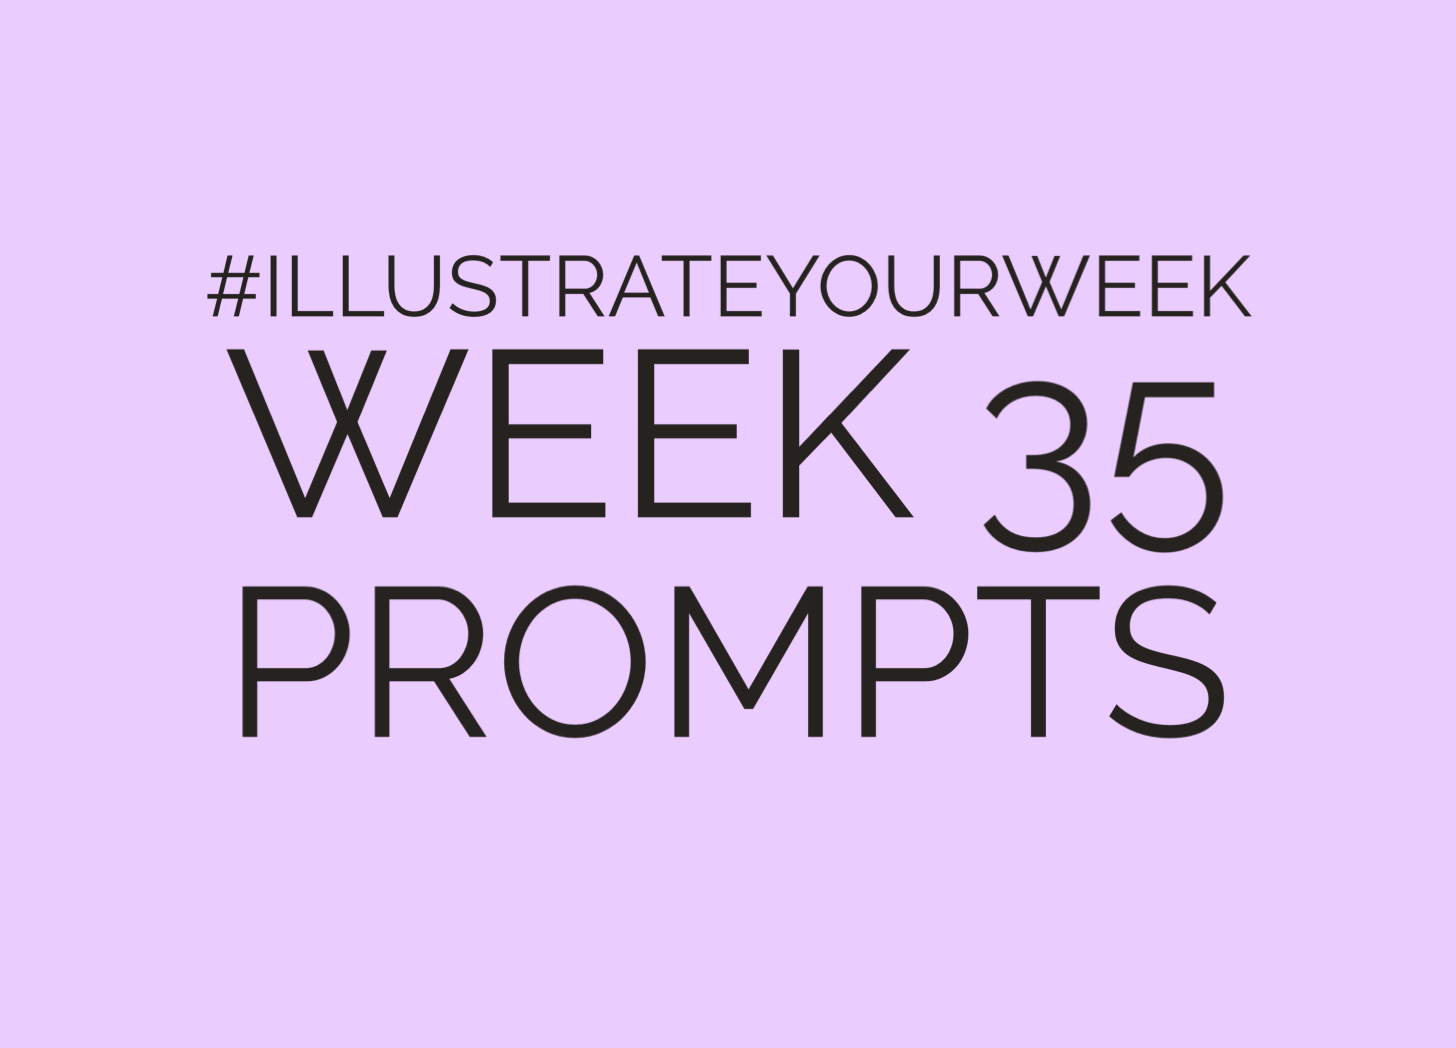 Week 35 Illustrate Your Week Prompts Headline Only